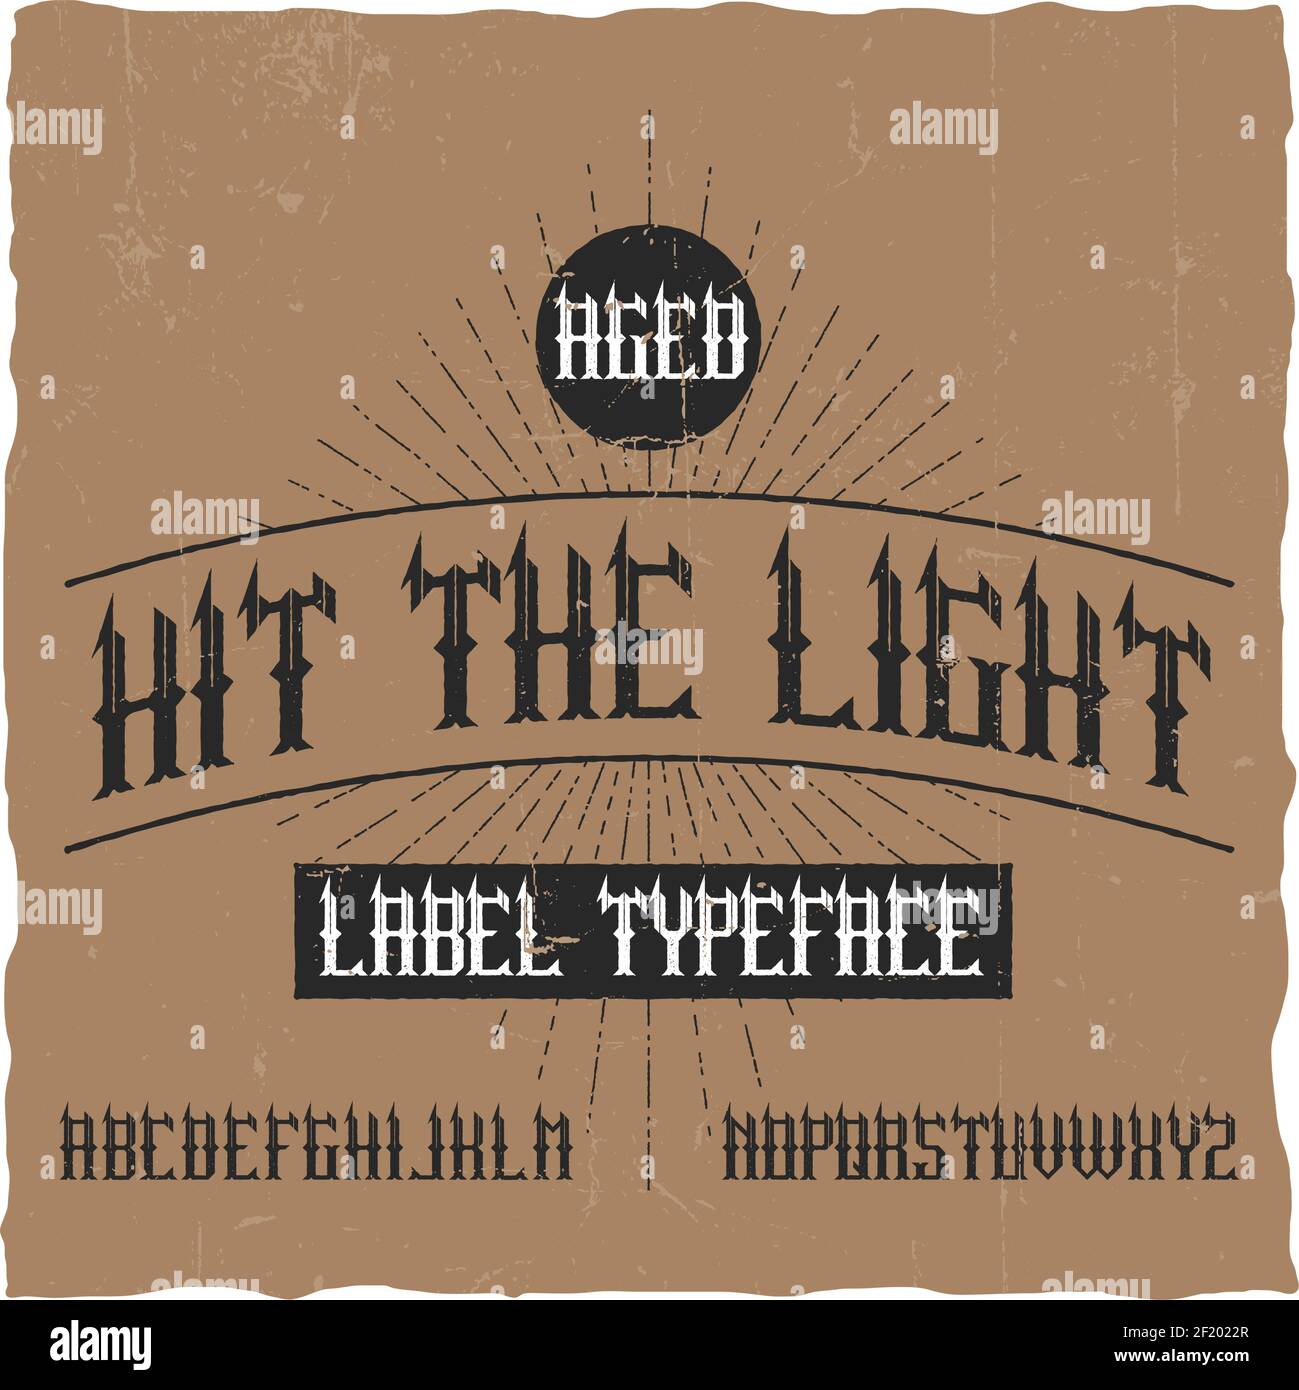 Vintage Label Schrift namens Hit the Light. Gute Schriftart für jedes Vintage-Label oder Logo. Stock Vektor